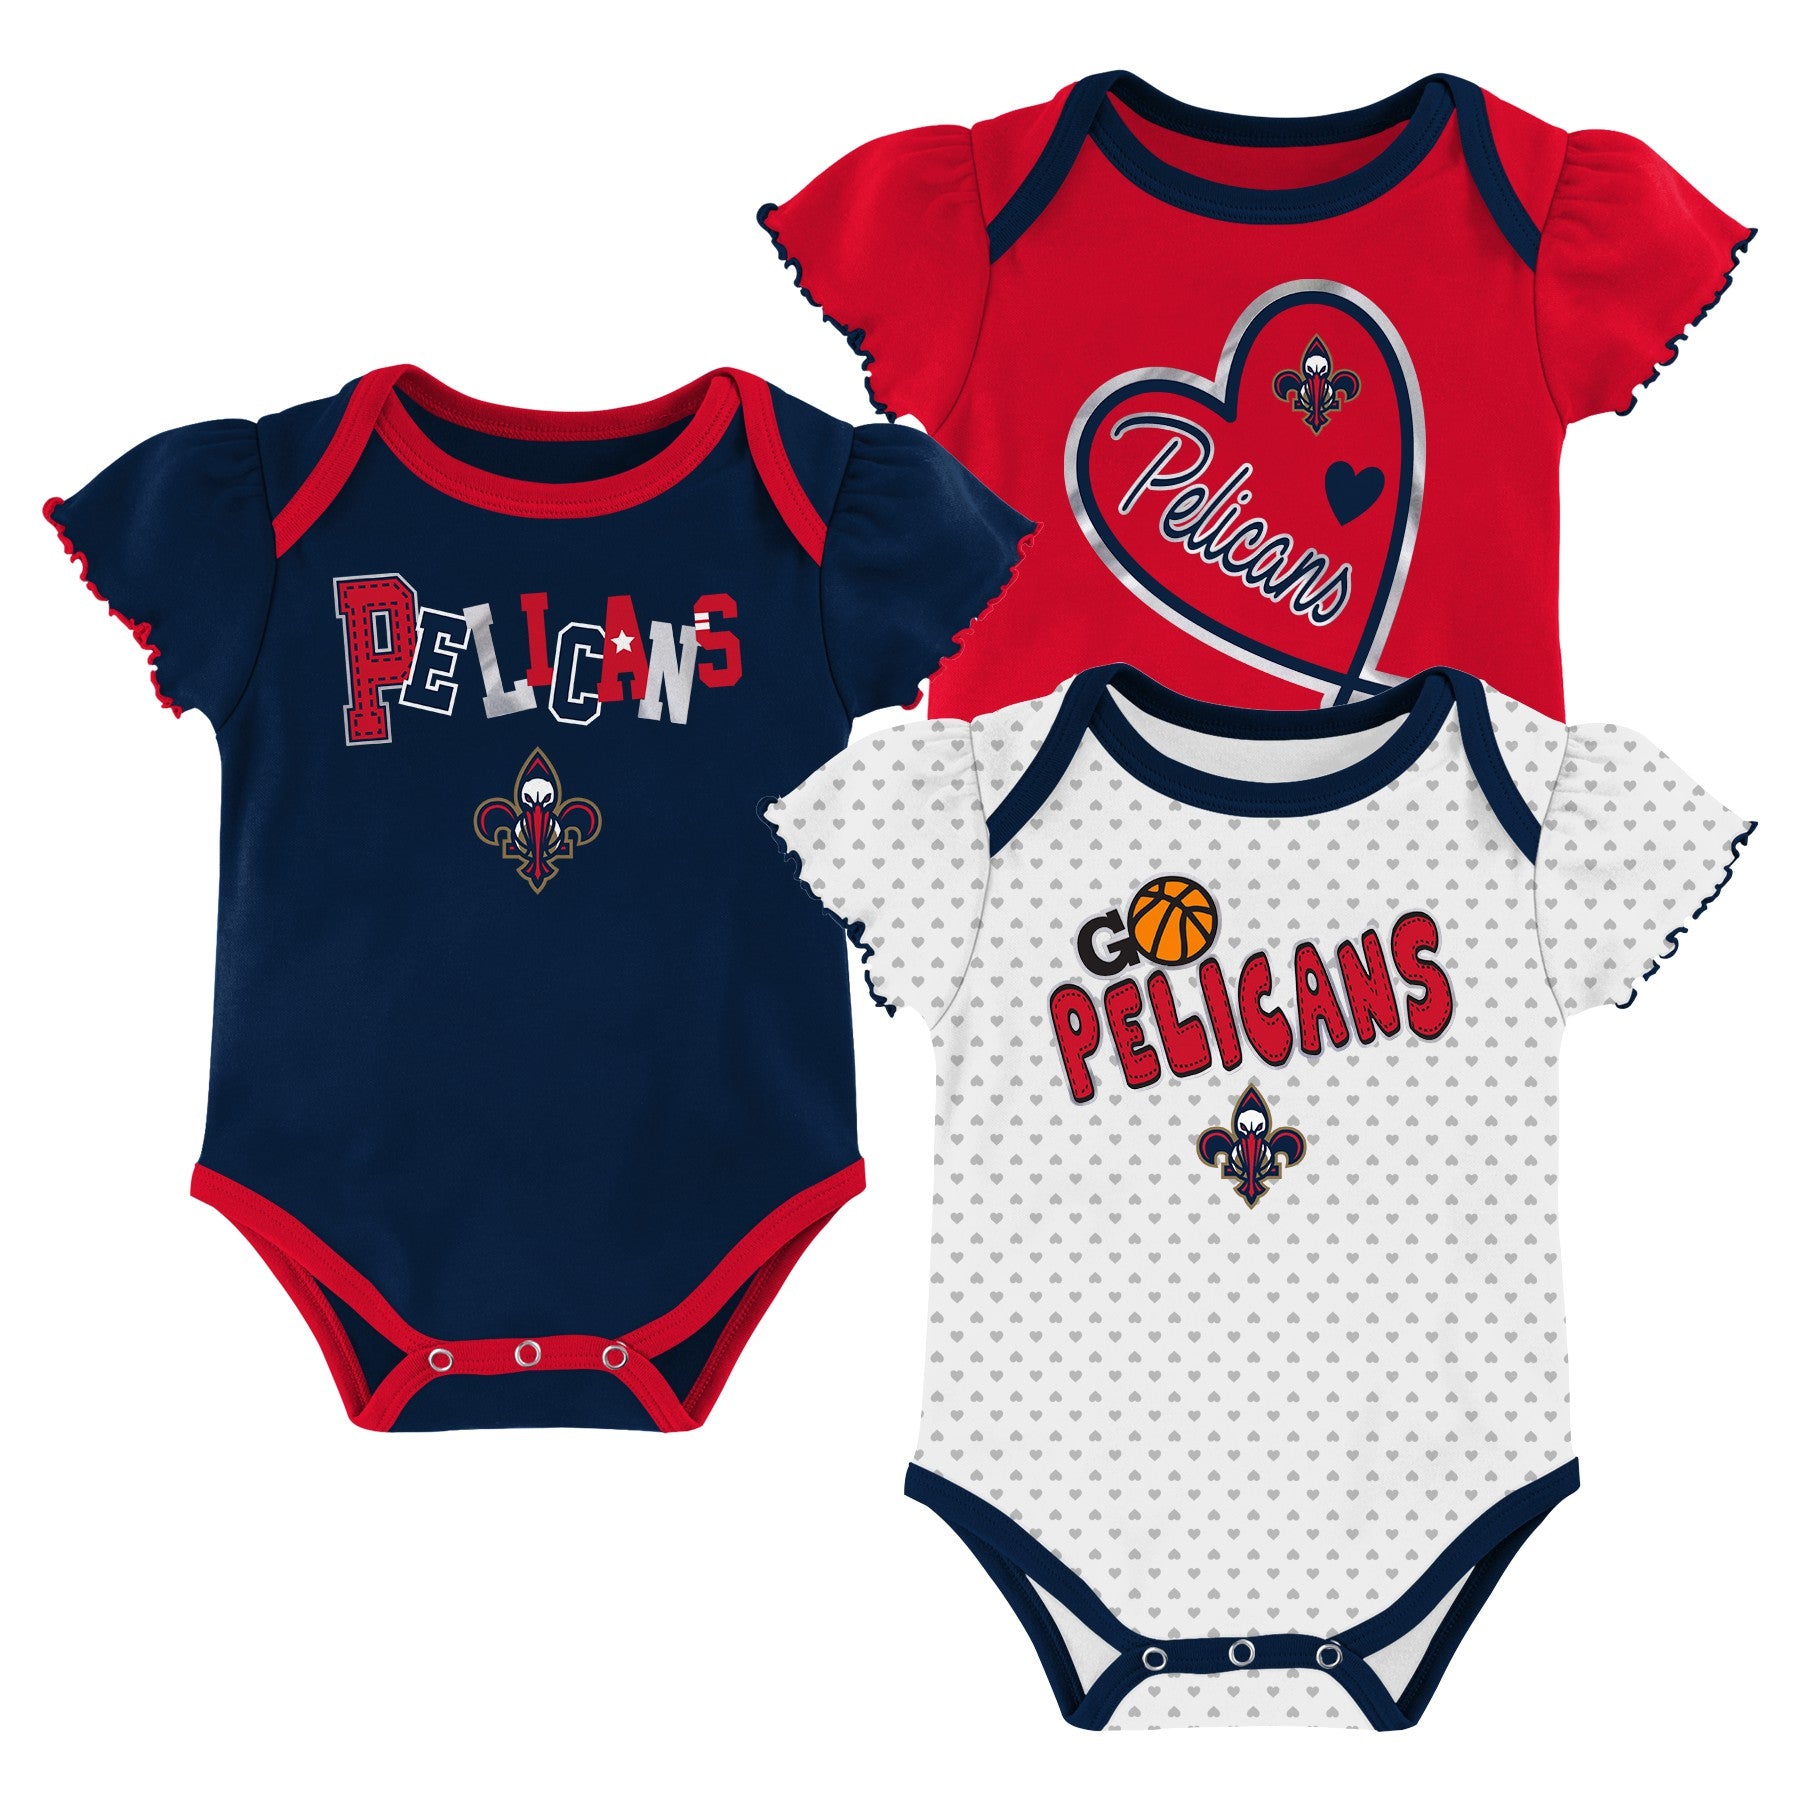 NBA Baby Clothing, NBA Infant Jerseys, Toddler Apparel